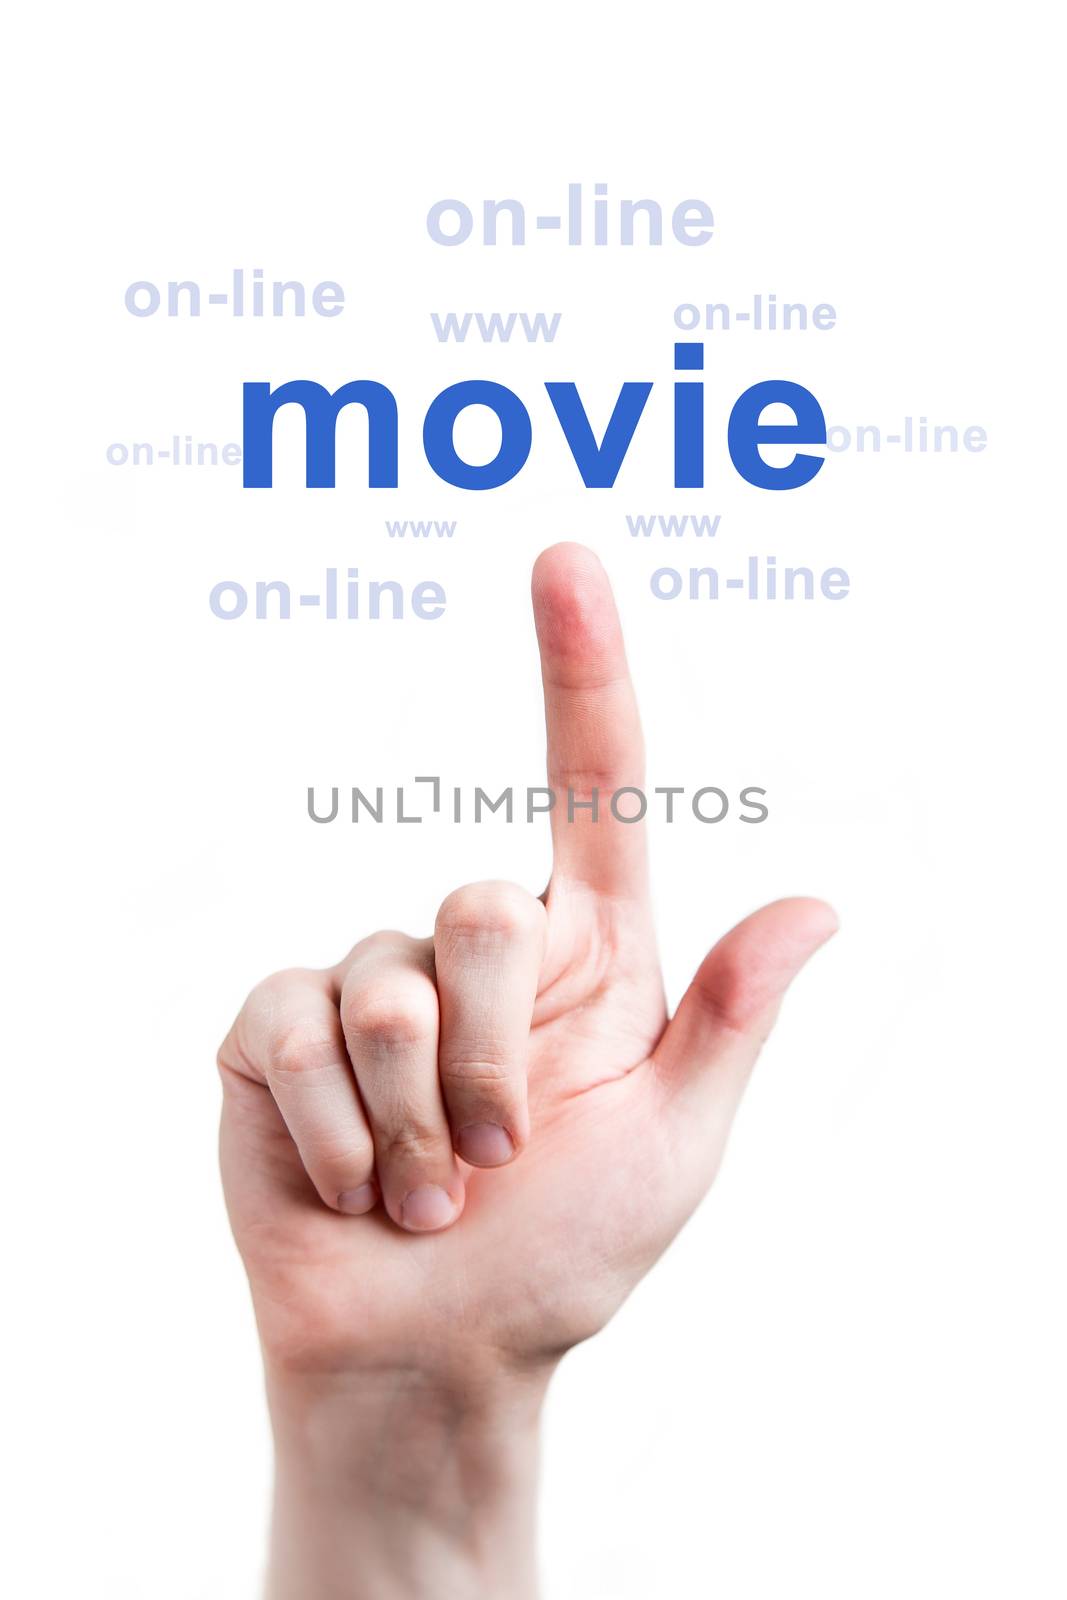 Online movies by MichalLudwiczak